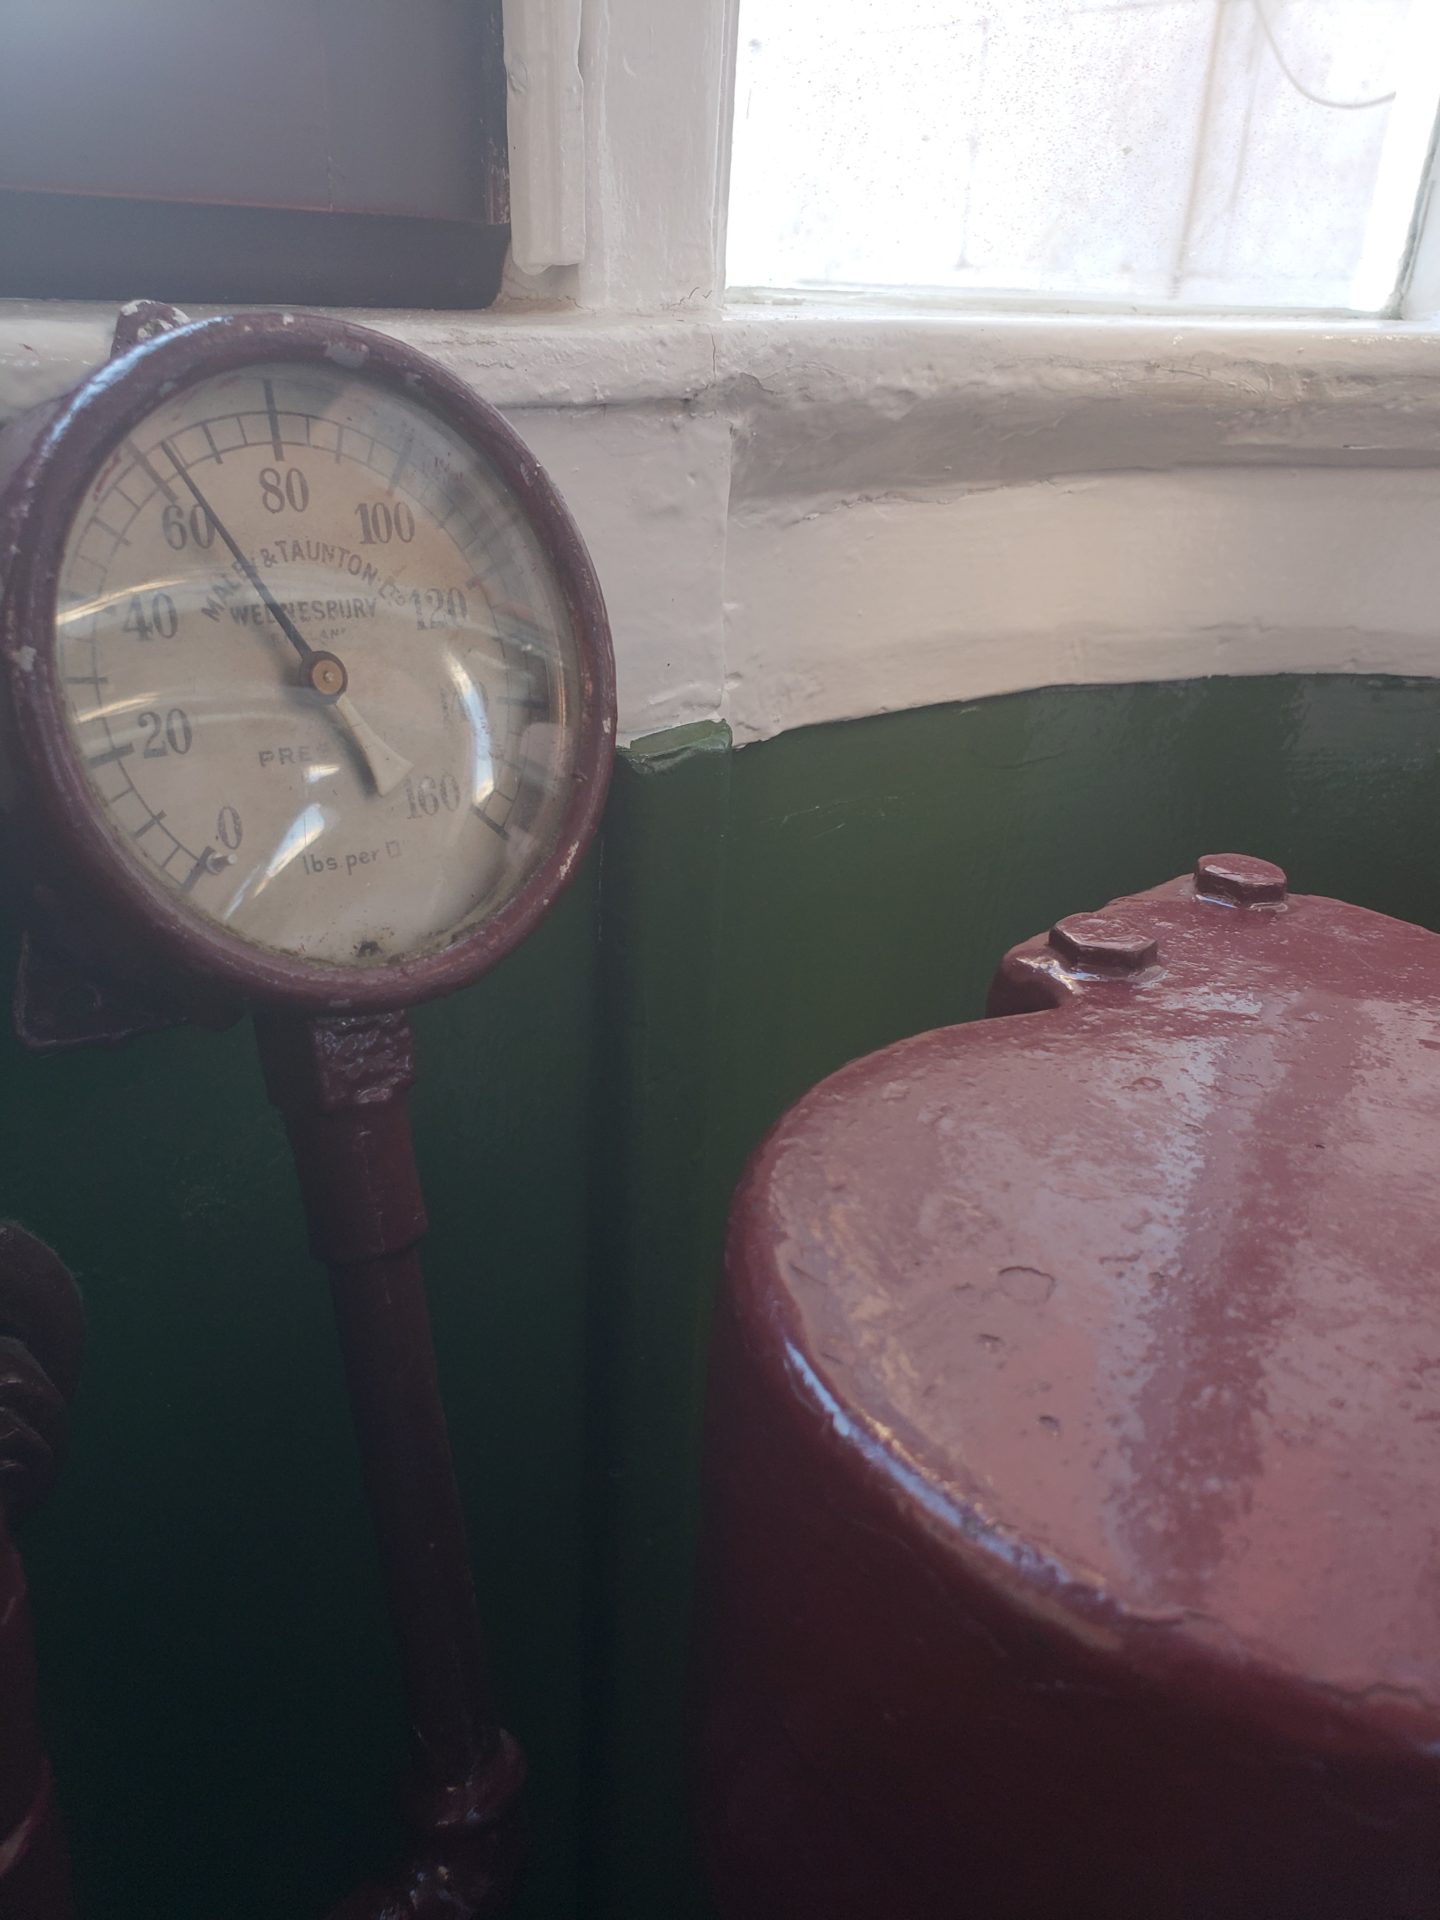 a gauge next to a red cylinder